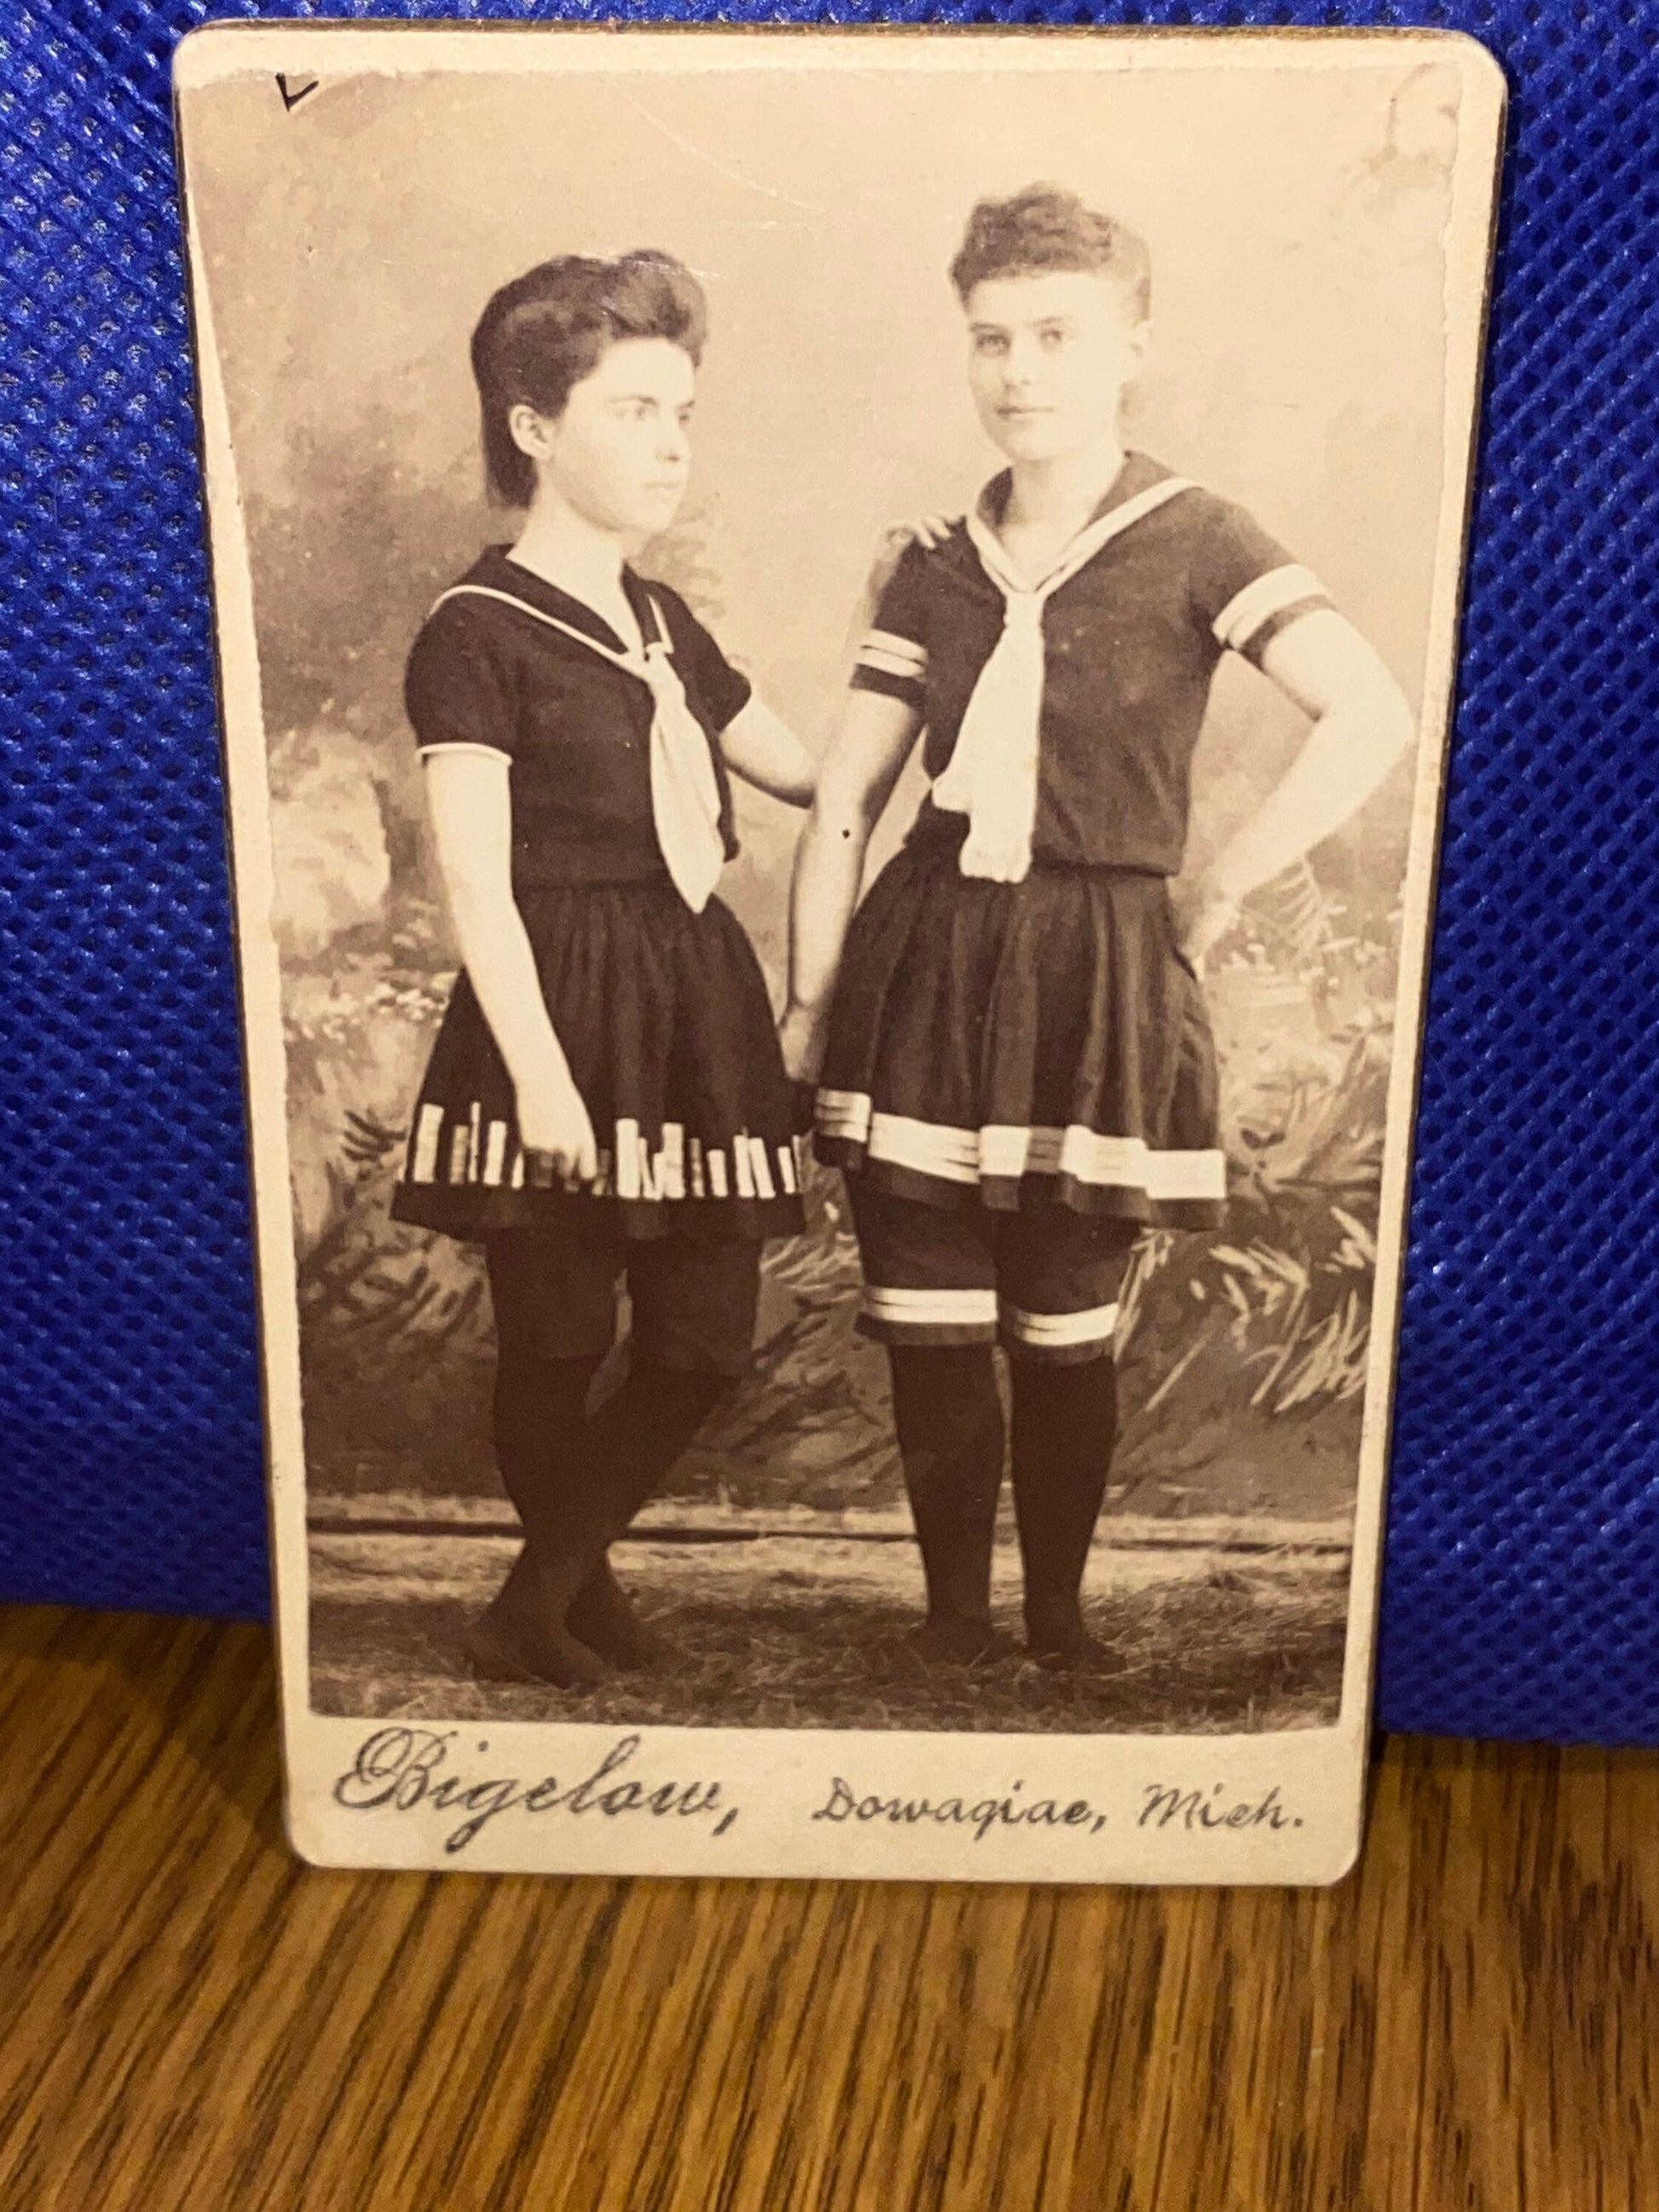 Antique cdv photo ladies display period bathing suit attire Victorian swimsuit fashion 1880-1890